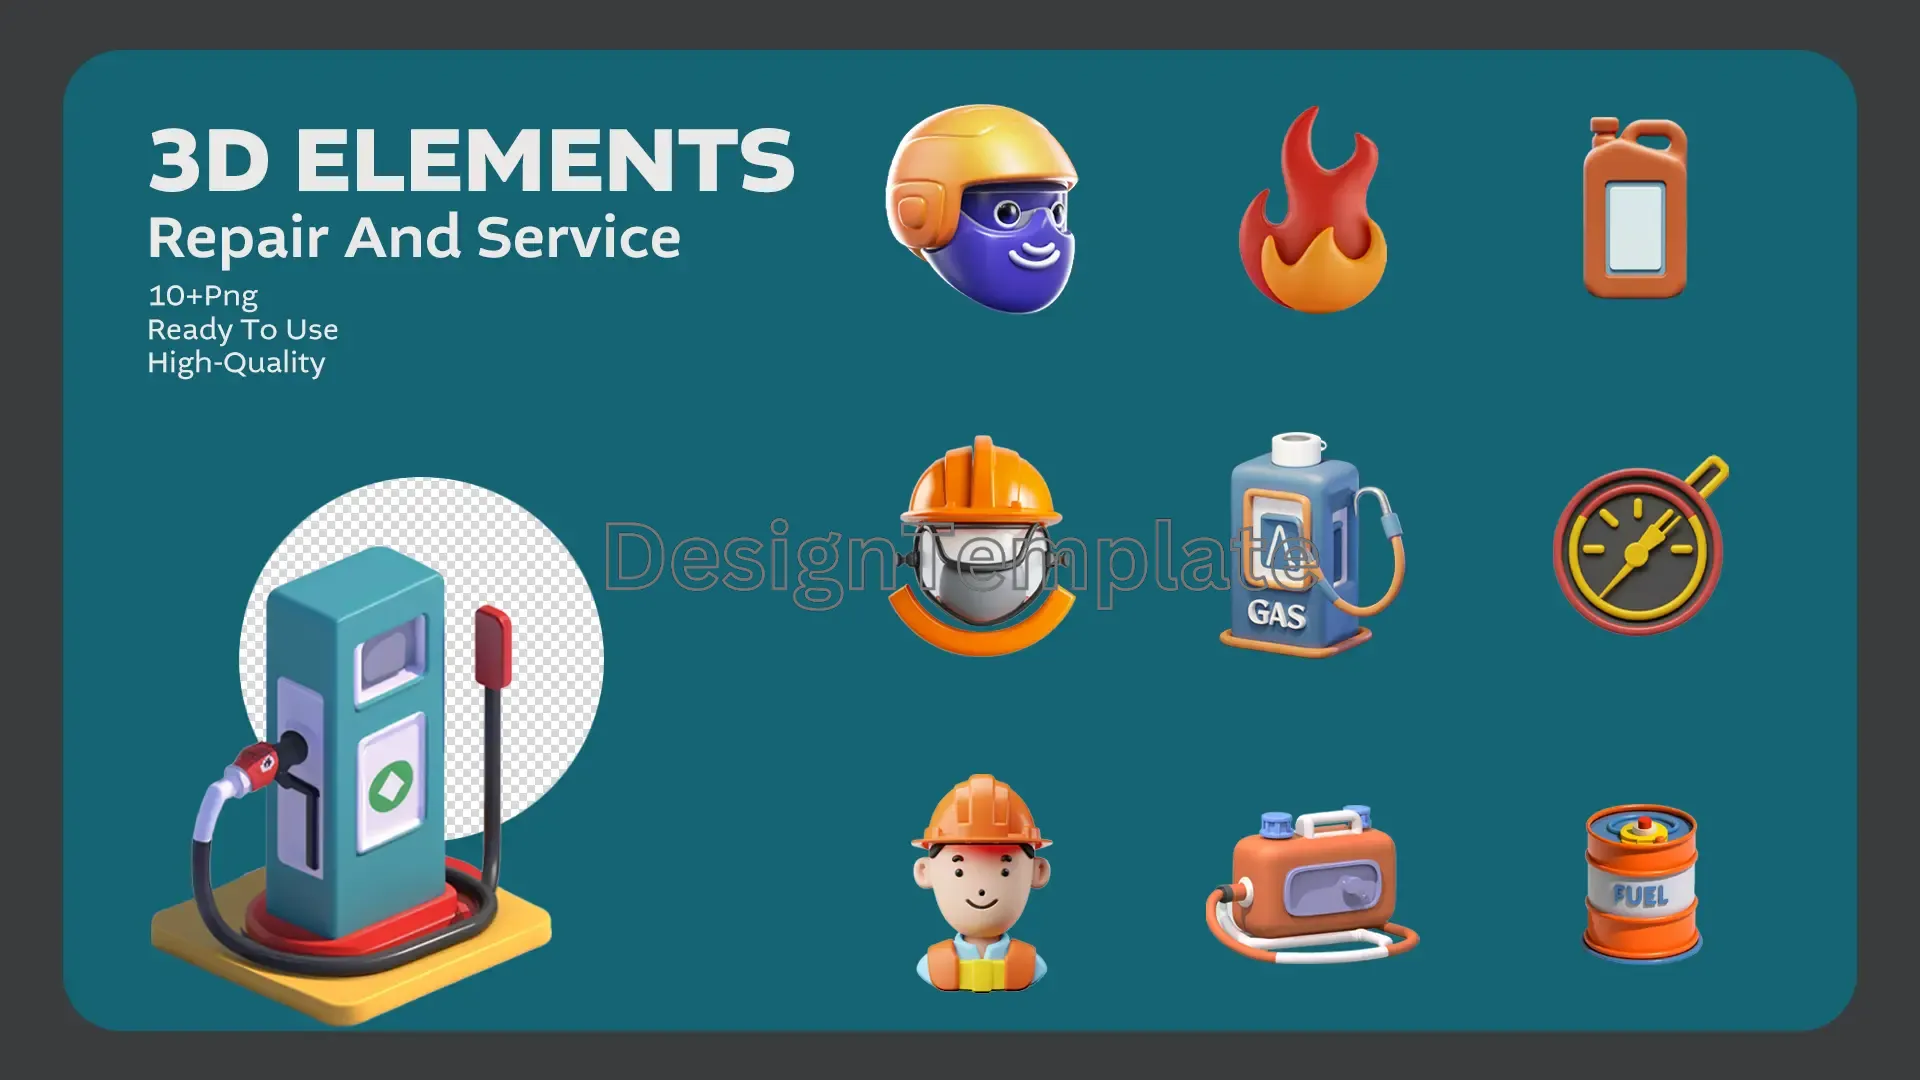 Handyman's Collection Essential 3D Service Elements image